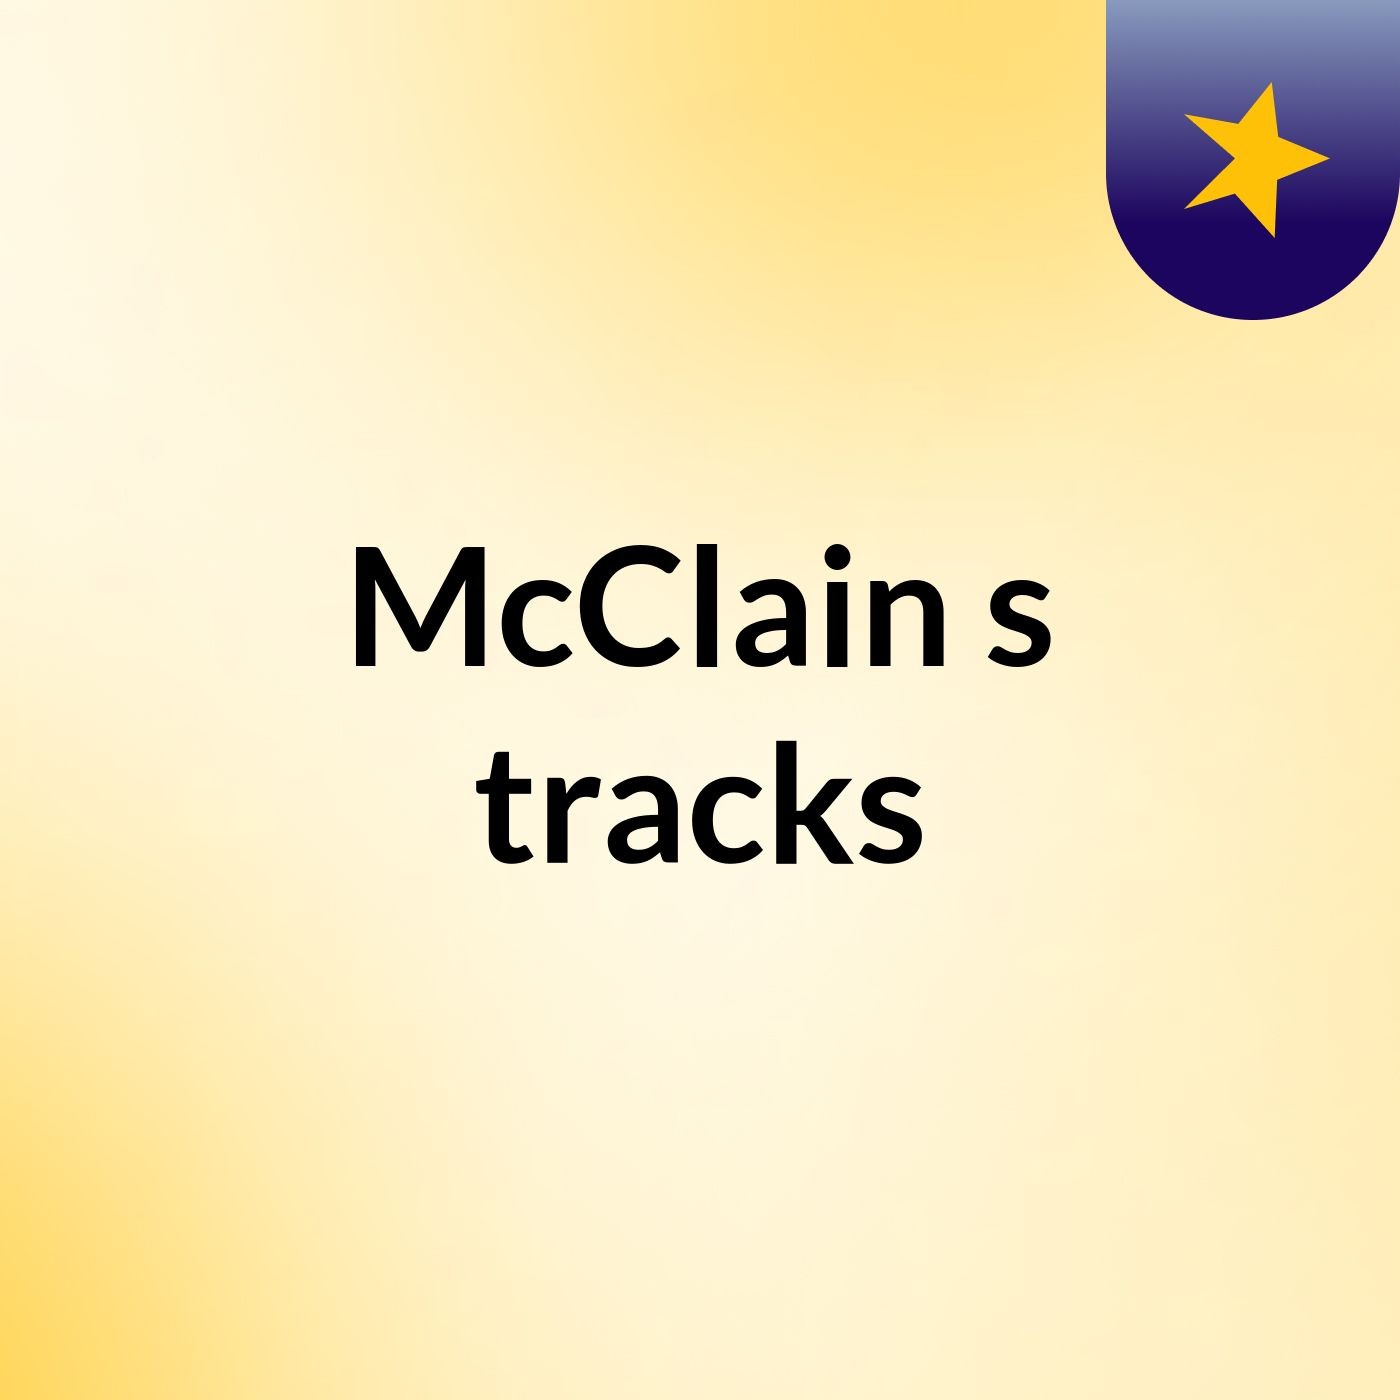 McClain's tracks